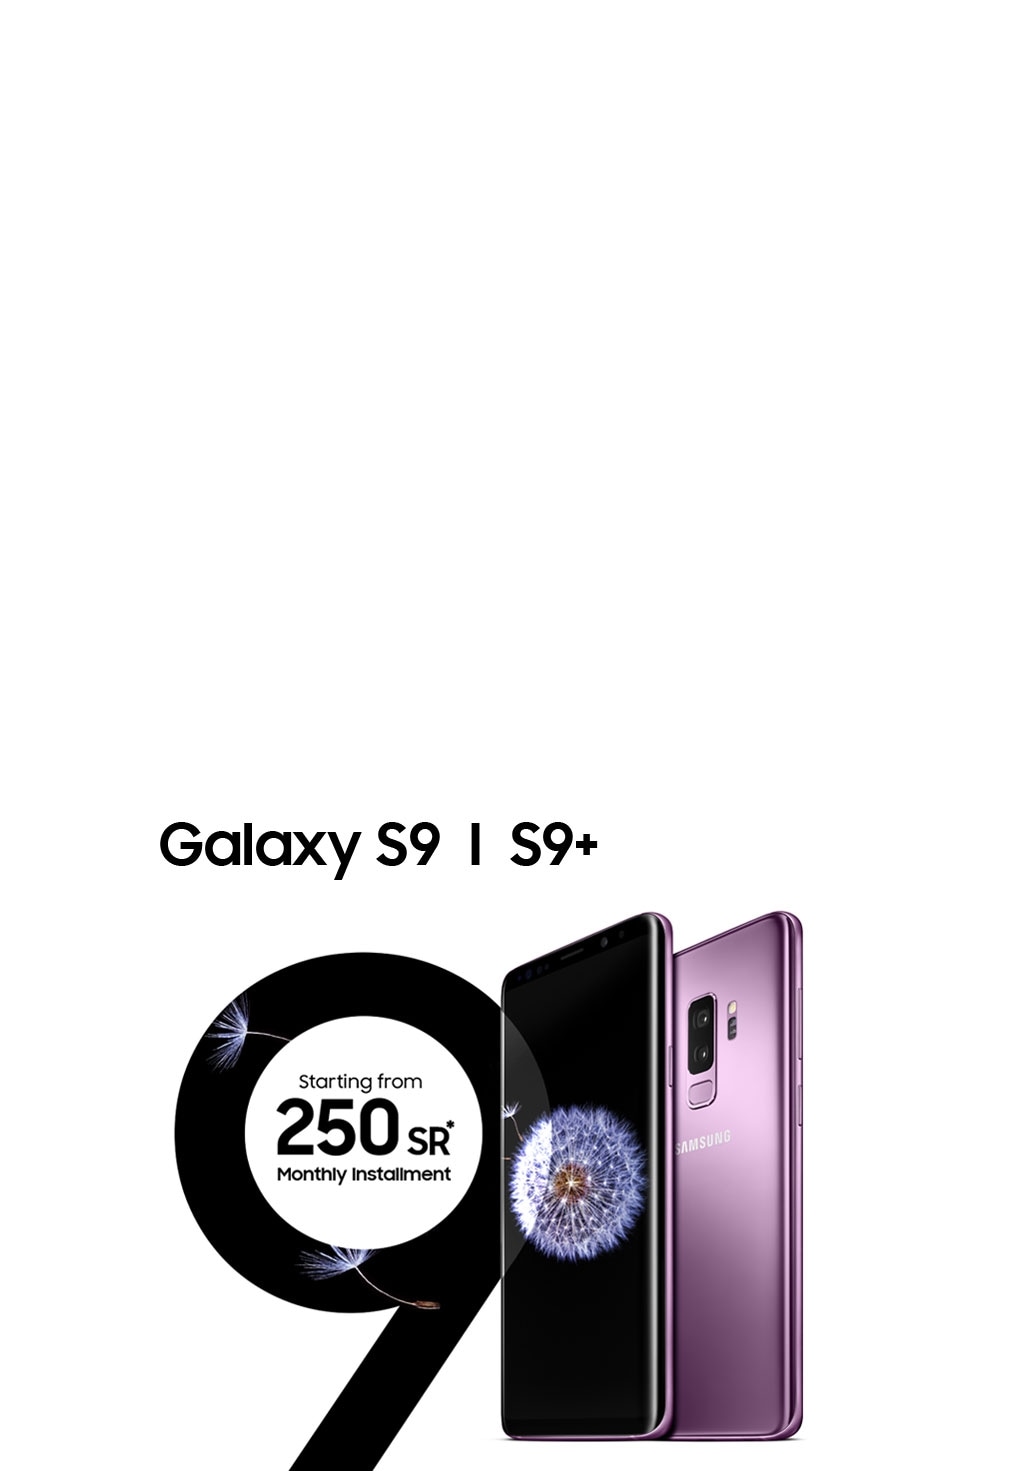 Galaxy S9 Installment Offer Samsung Saudi Arabia